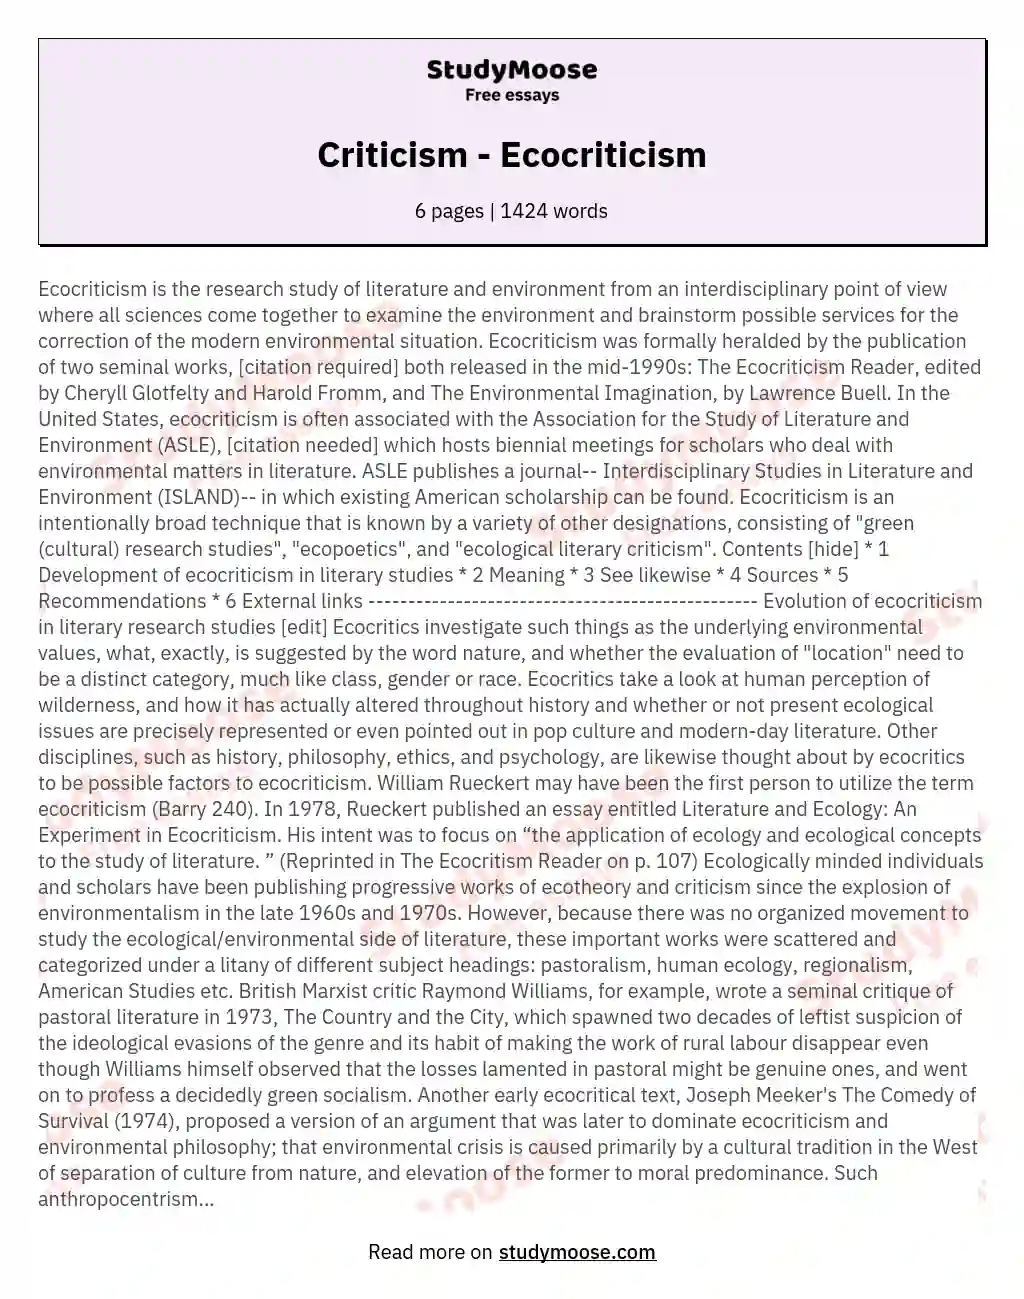 Criticism - Ecocriticism essay